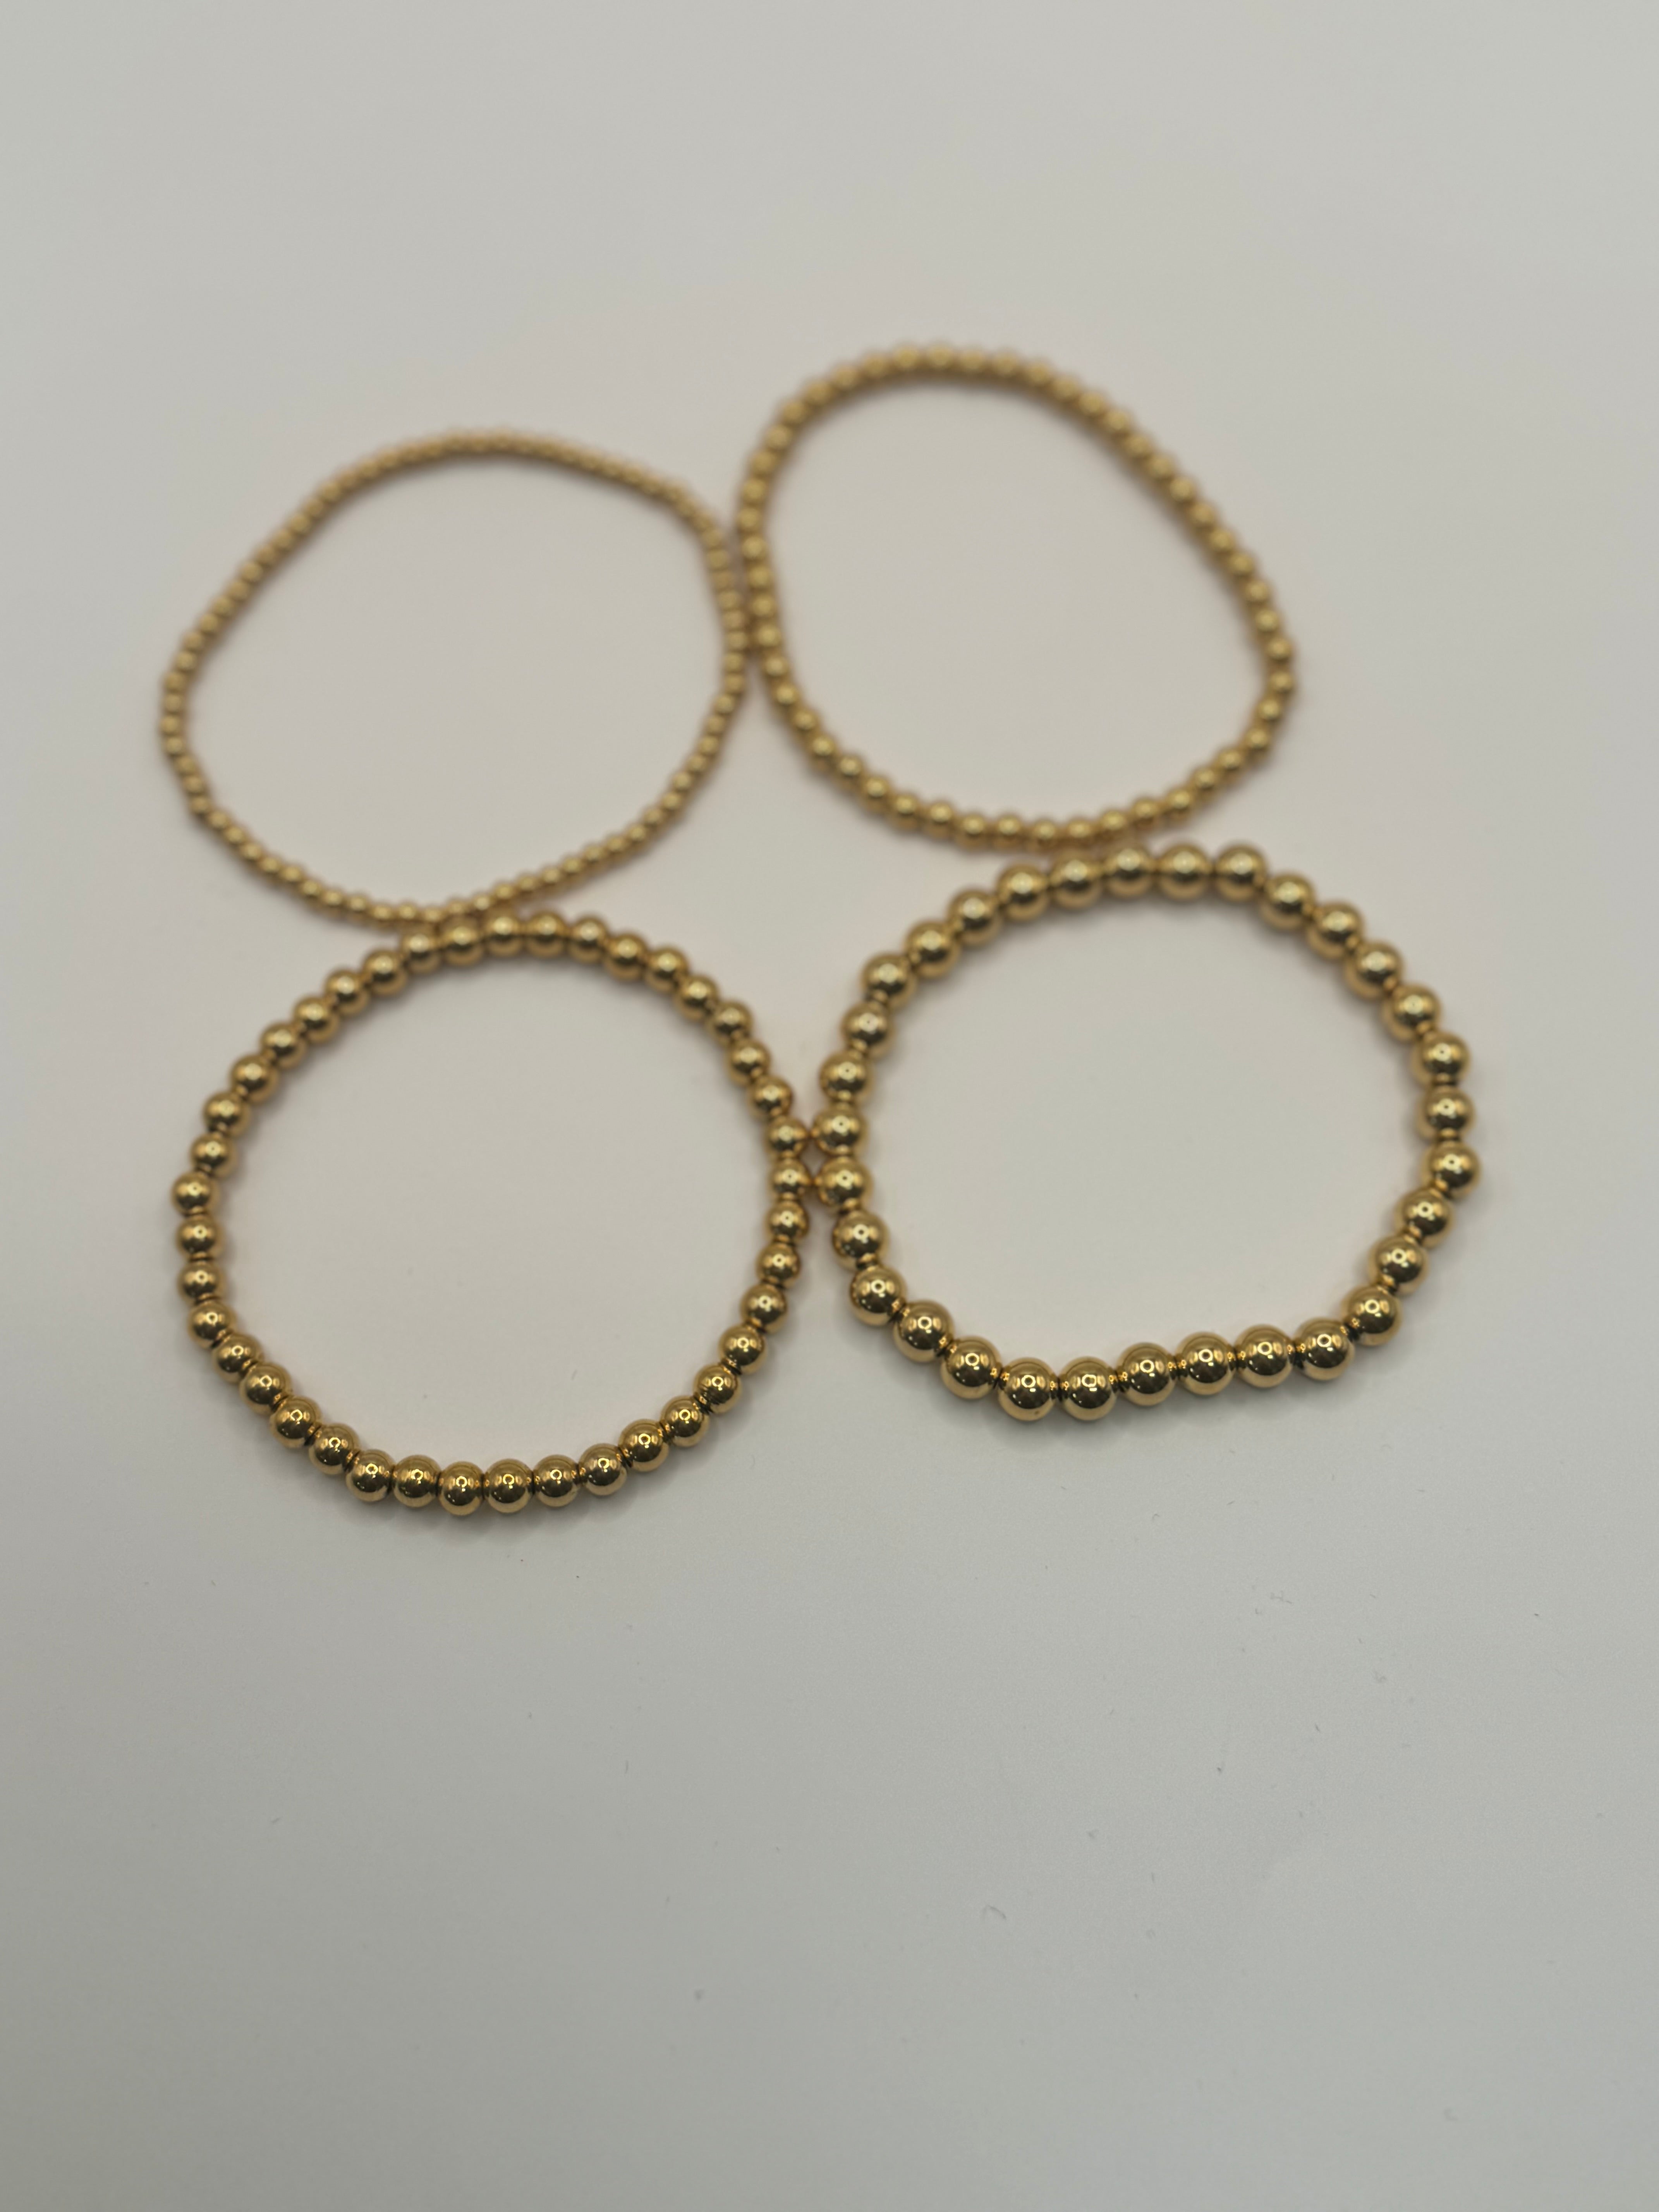 Set of 4 Gold Bead Bracelets